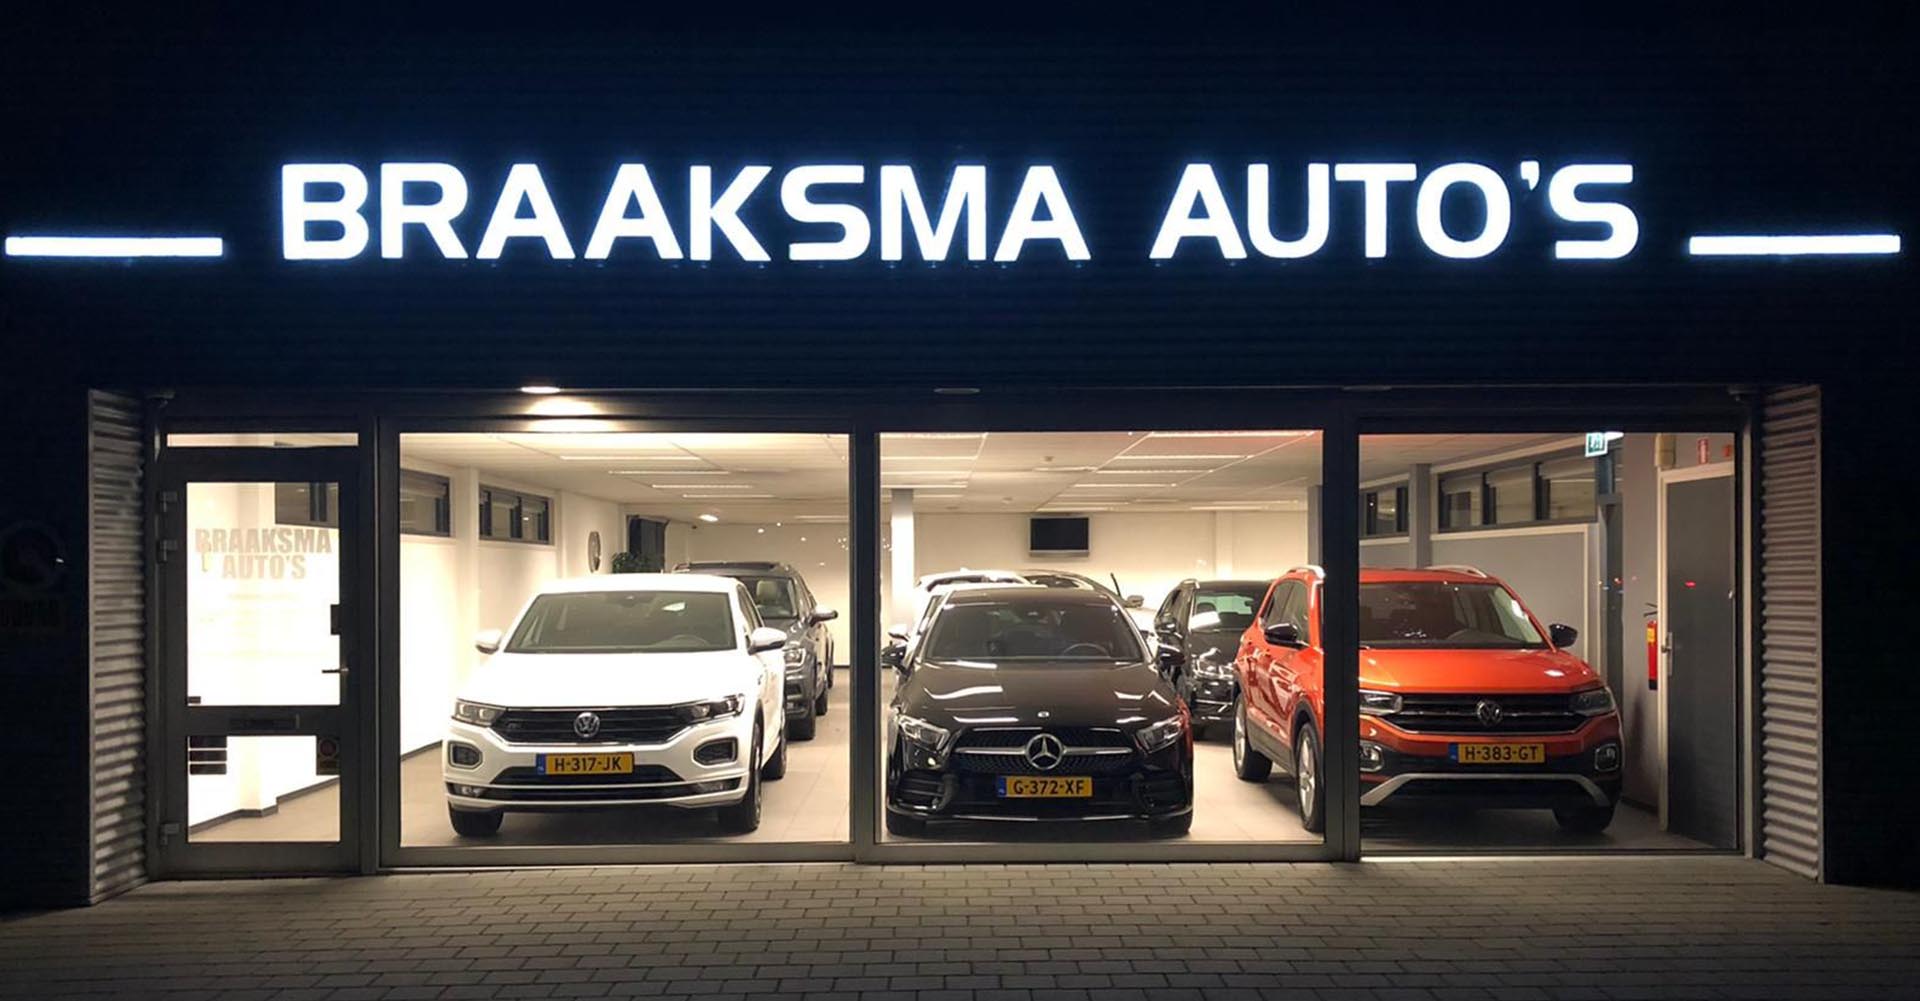 Braaksma Auto's - Visual